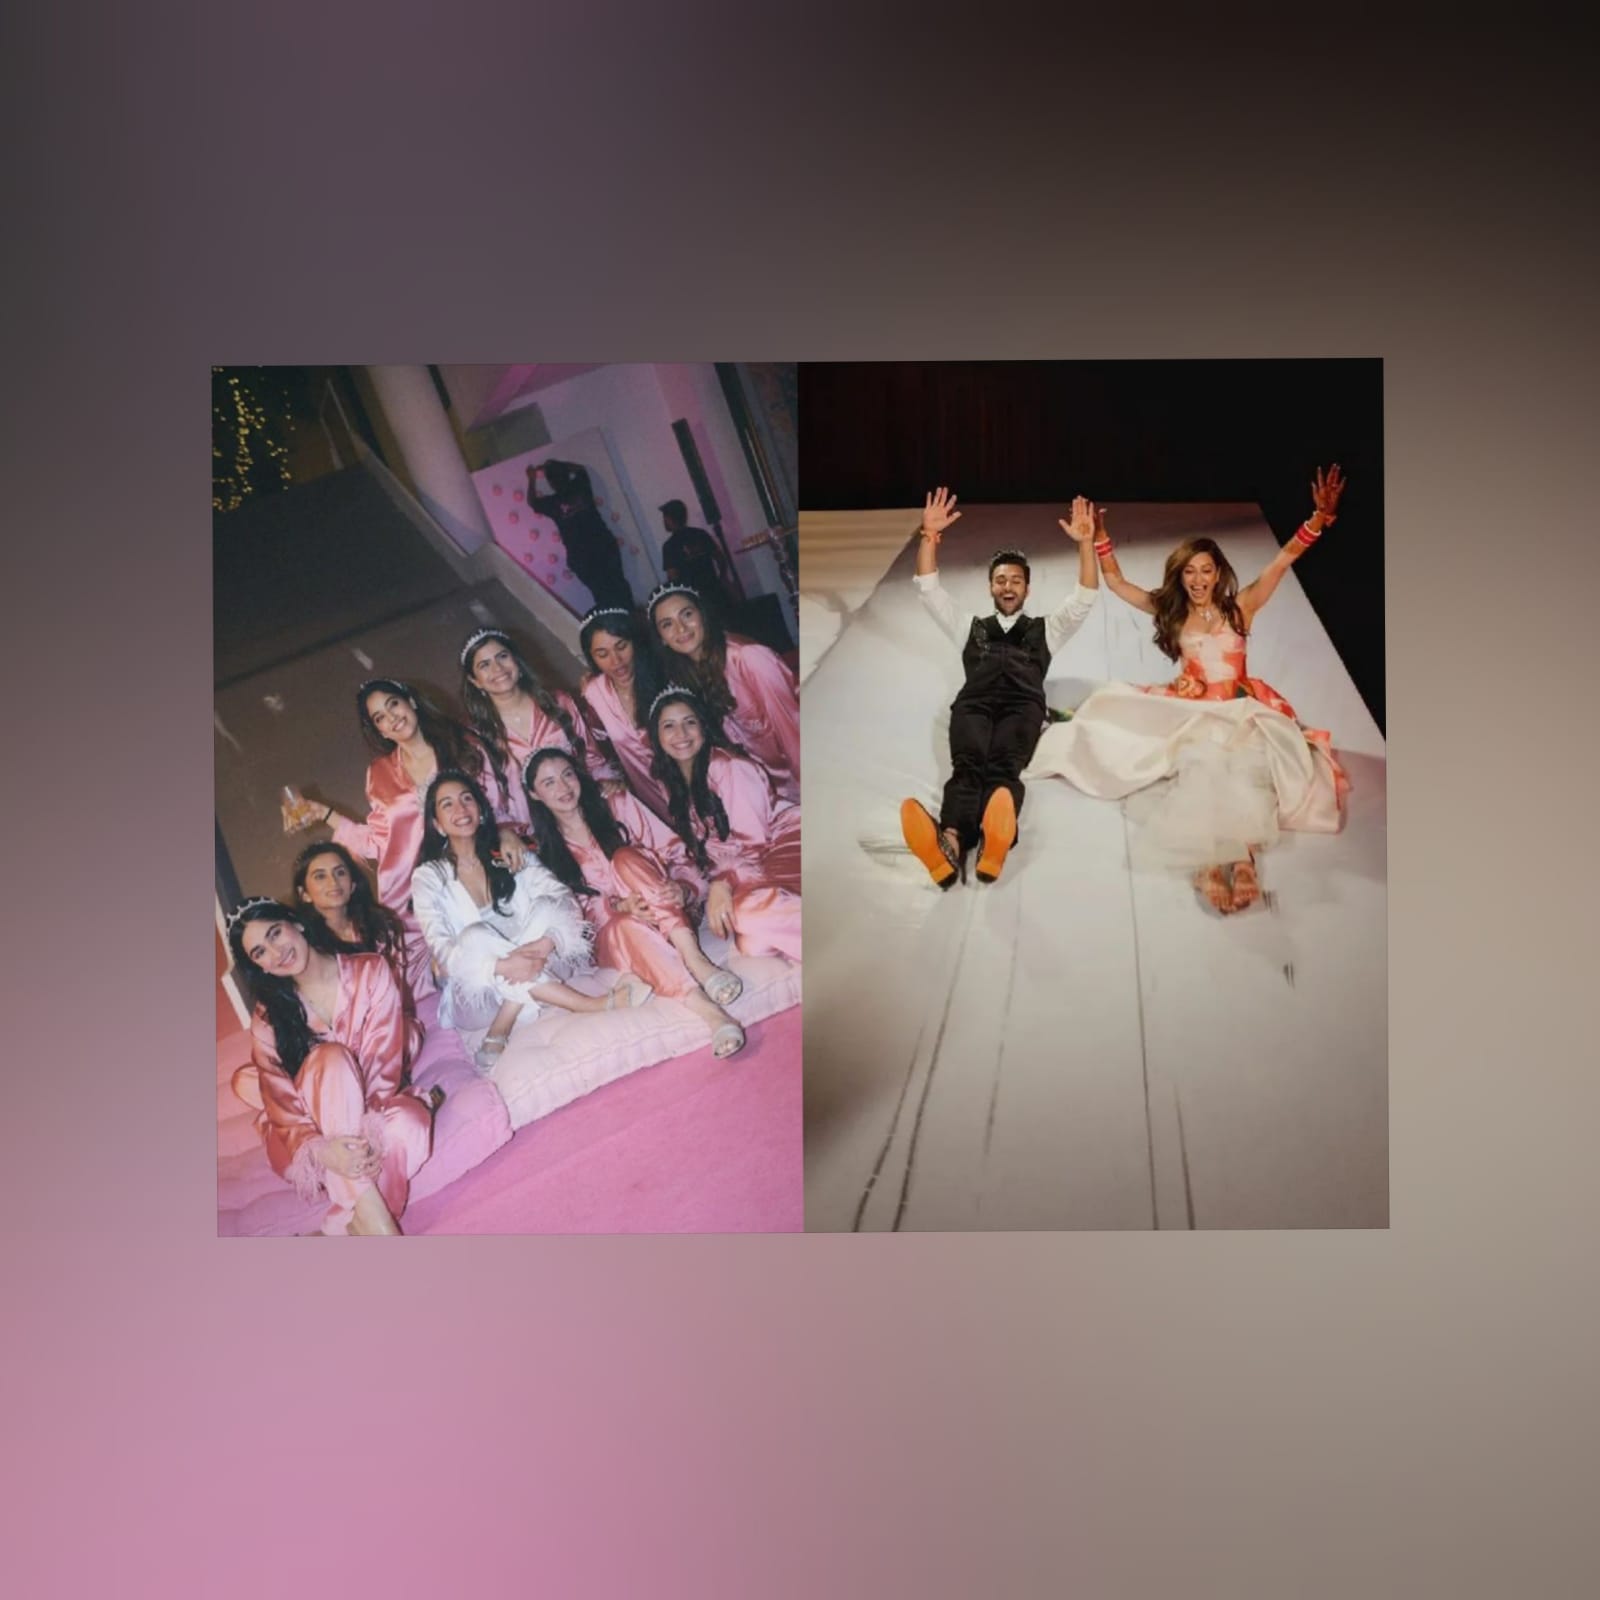 Celeb Wedding Trend Of Using Slides, Pulkit Samrat’s Wedding